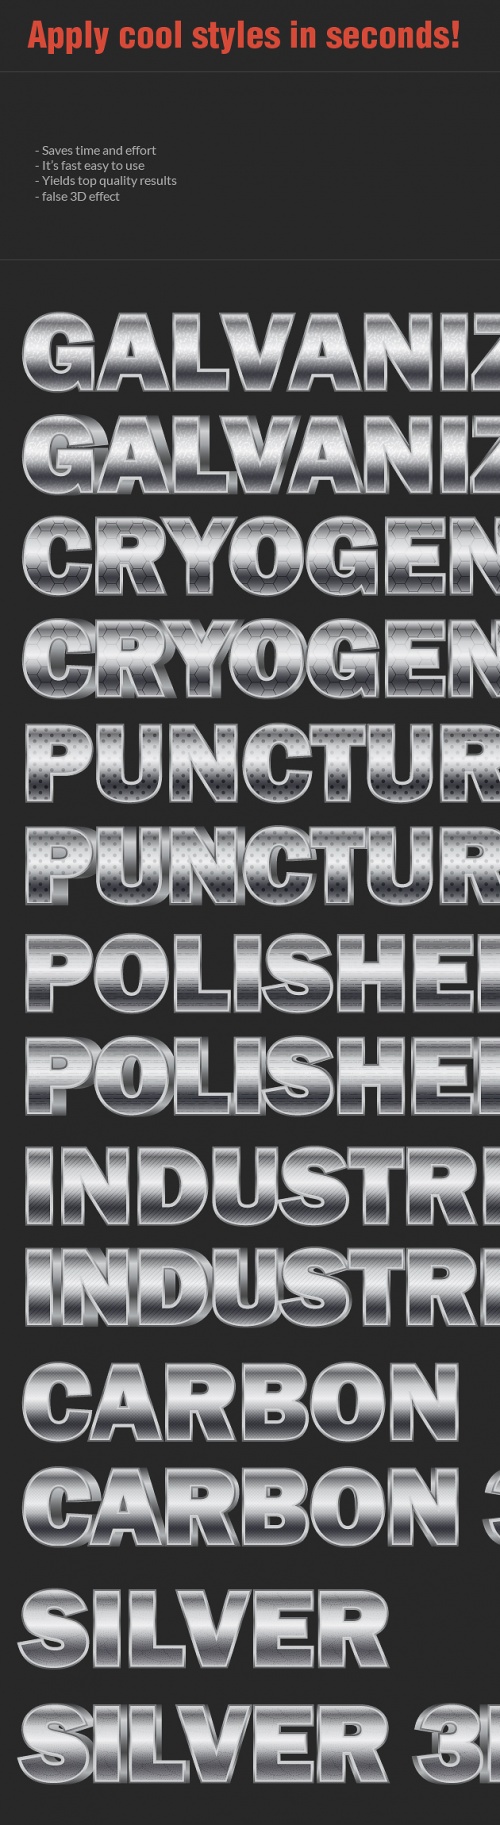 Designtnt - Metal Text Tyles for Illustrator